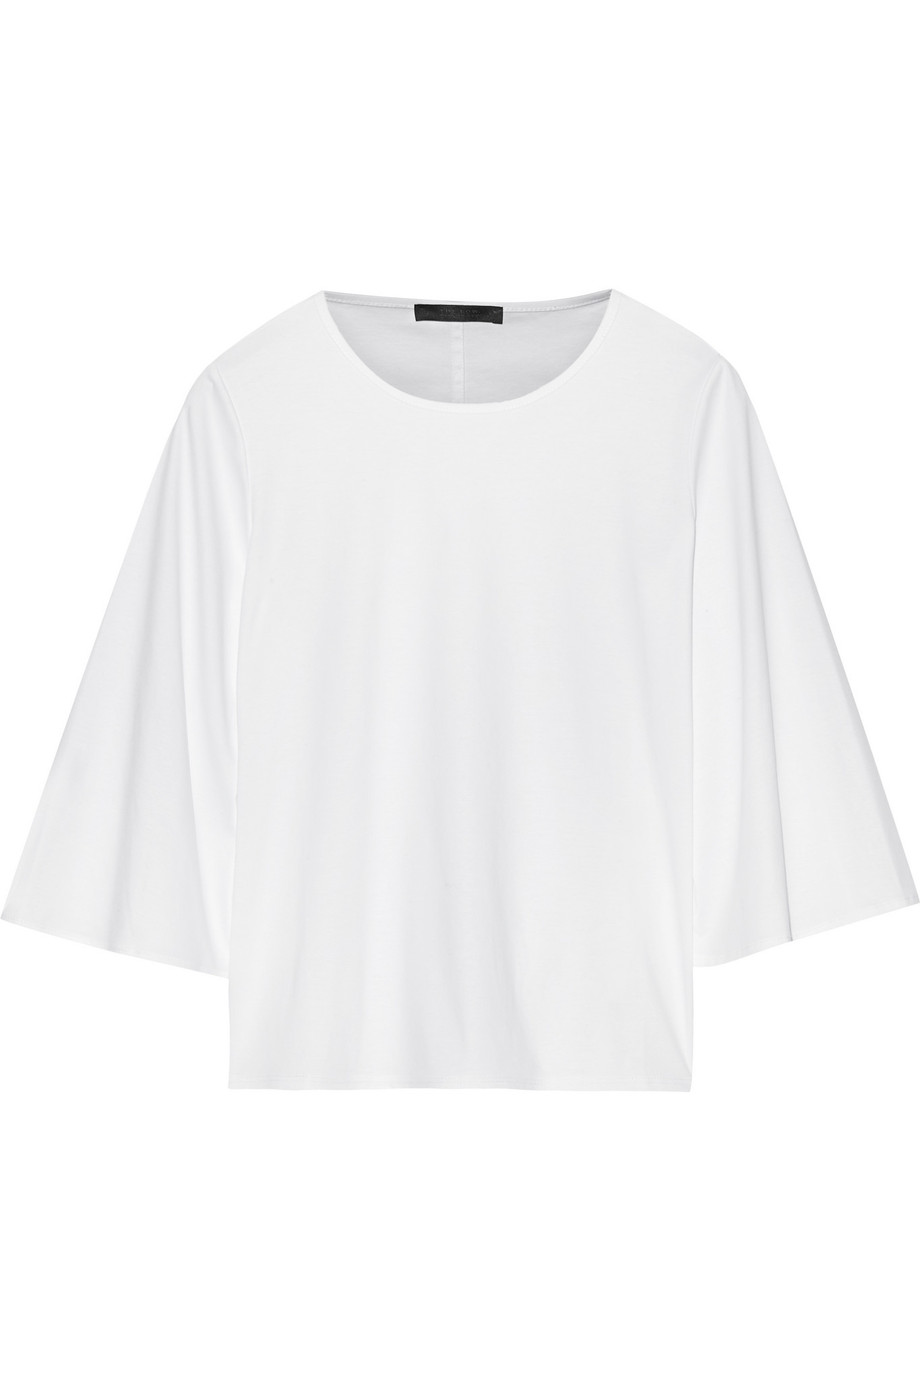 The Row Jena Cotton-jersey Top | ModeSens